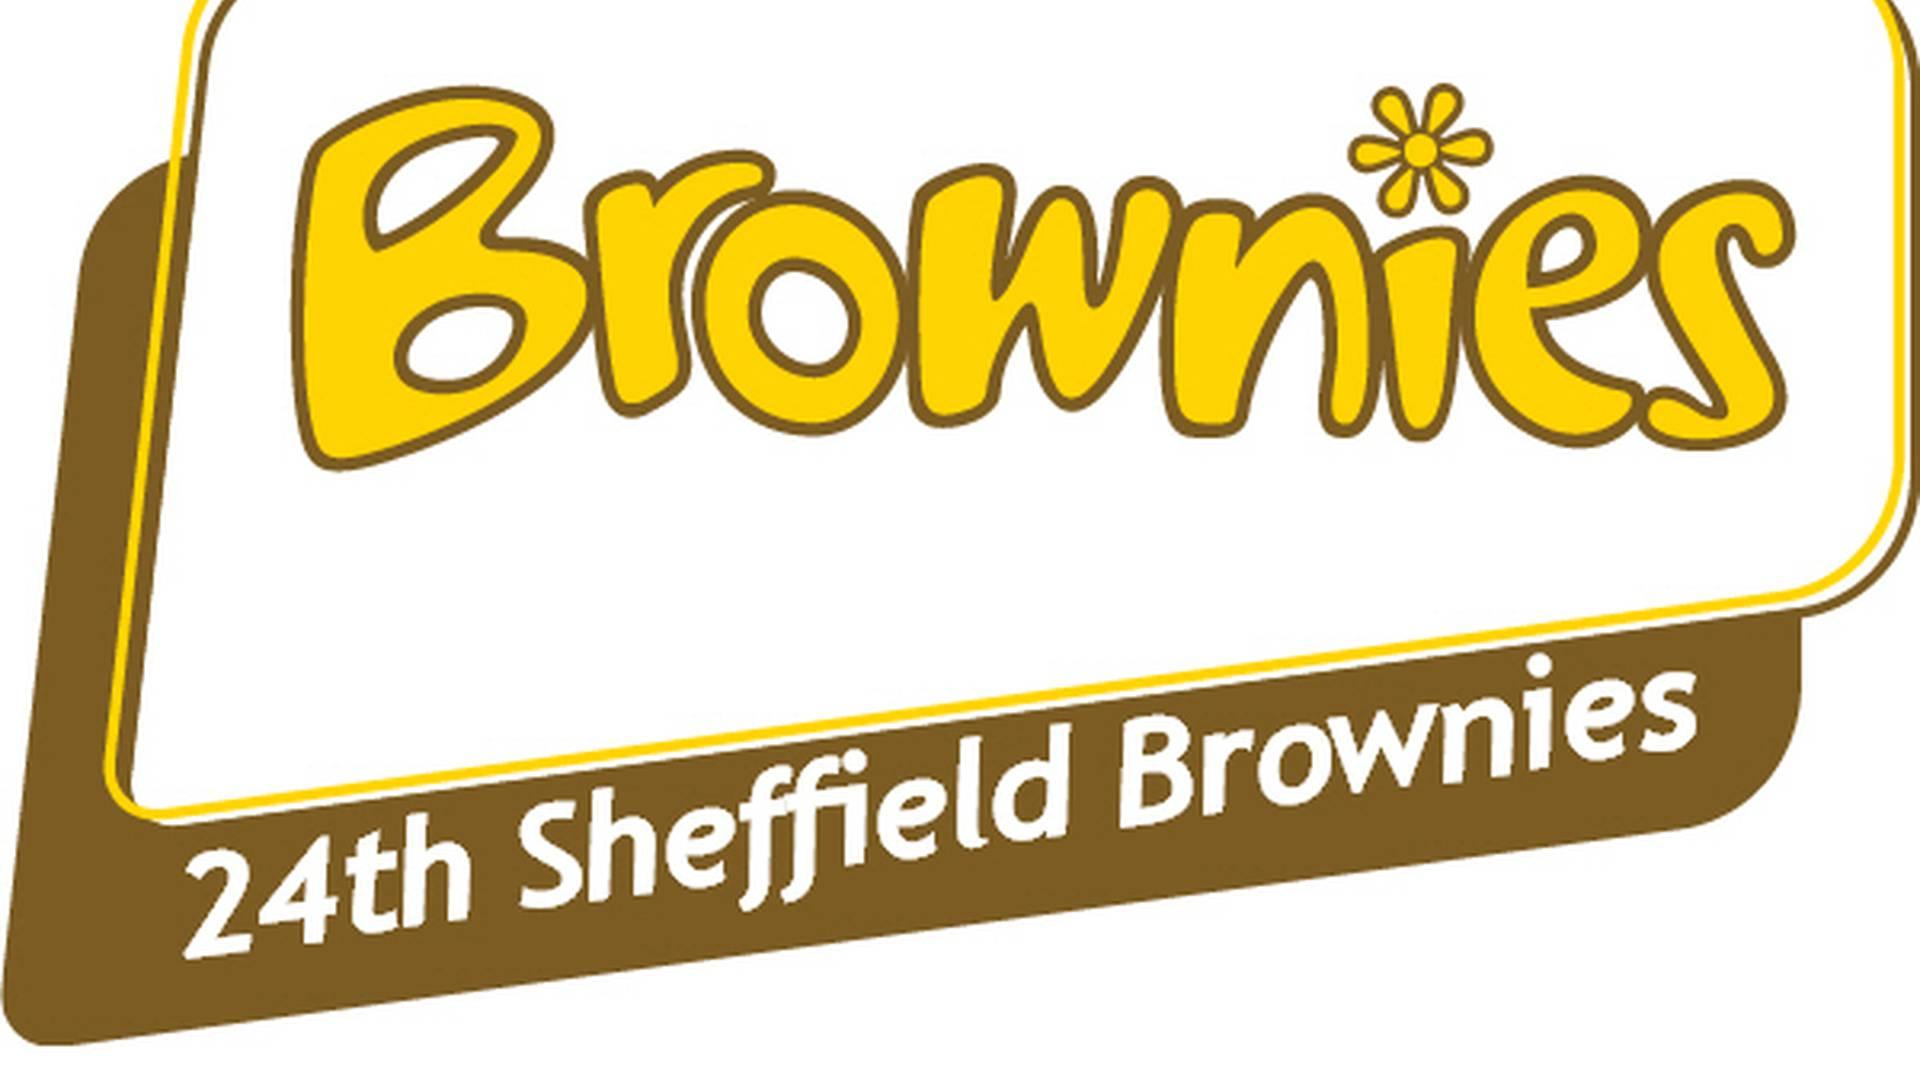 24th Sheffield Brownies photo